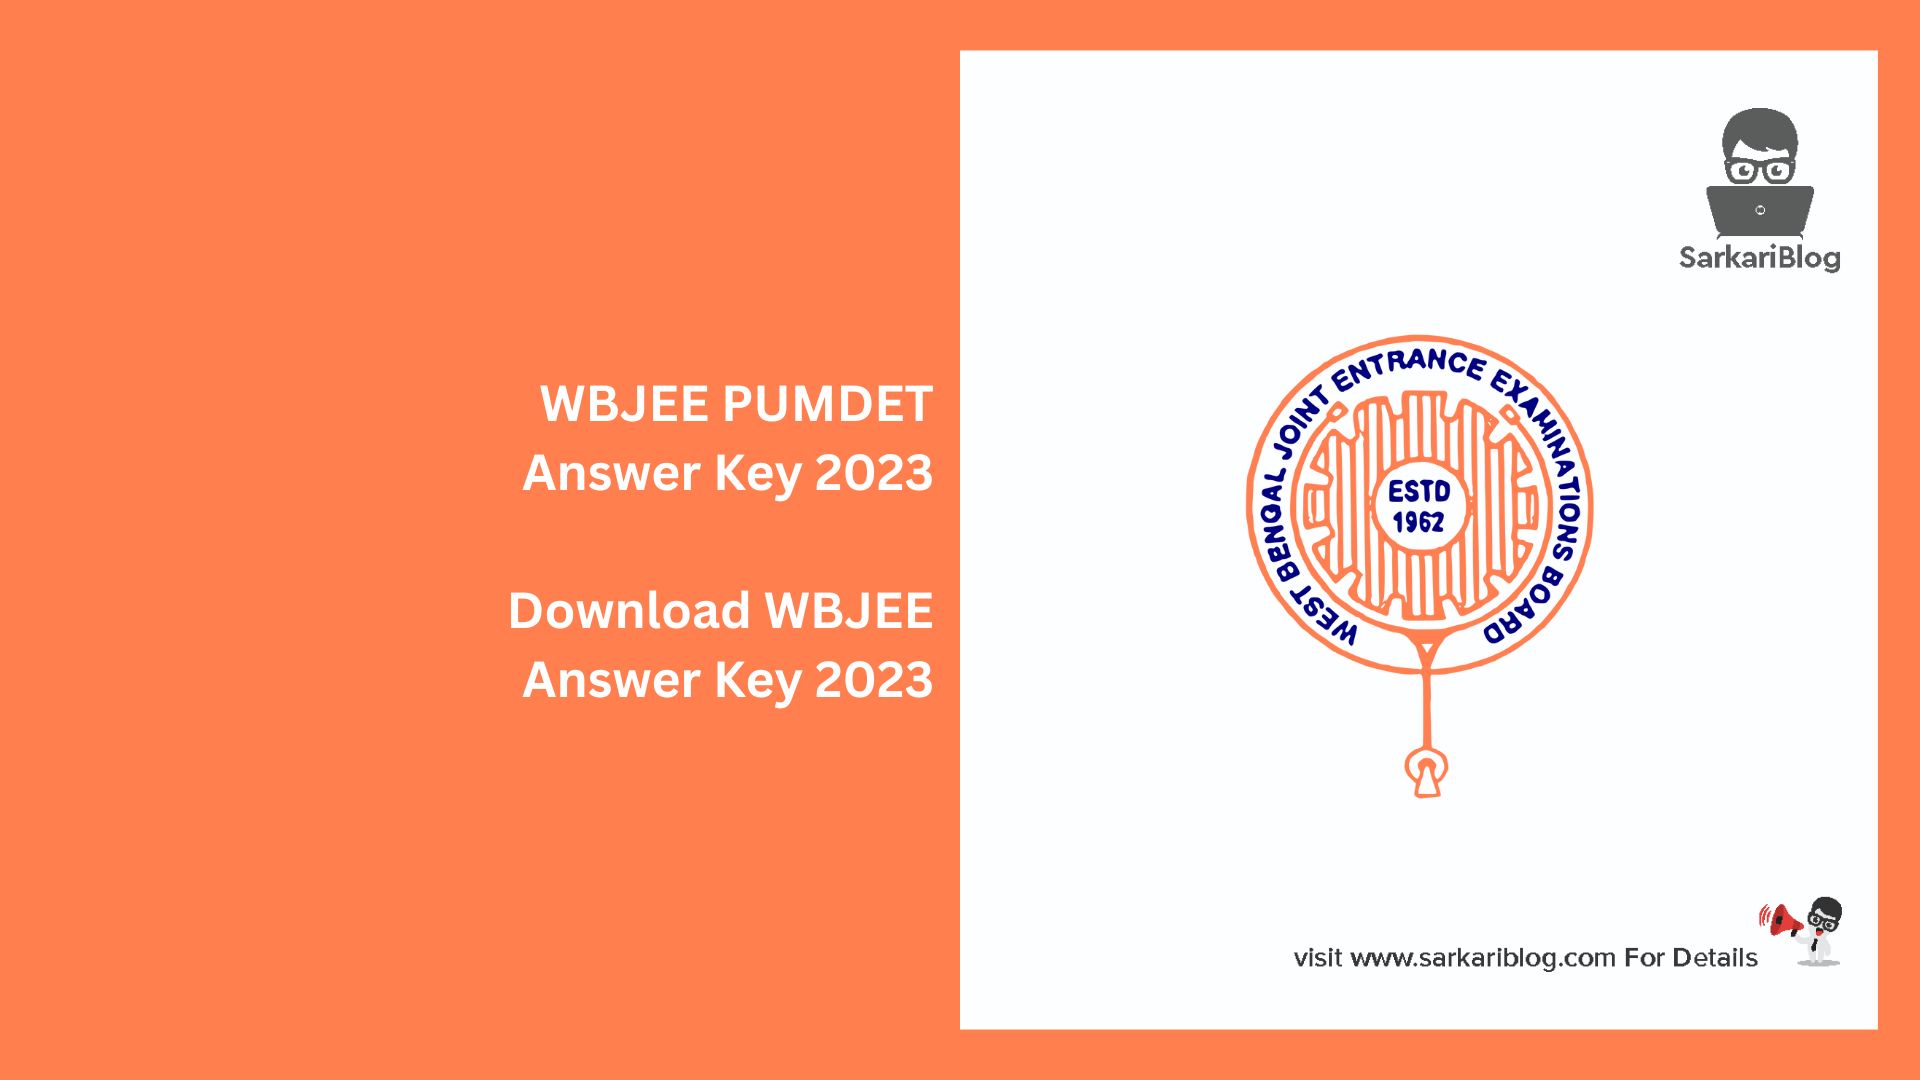 WBJEE PUMDET Answer Key 2023